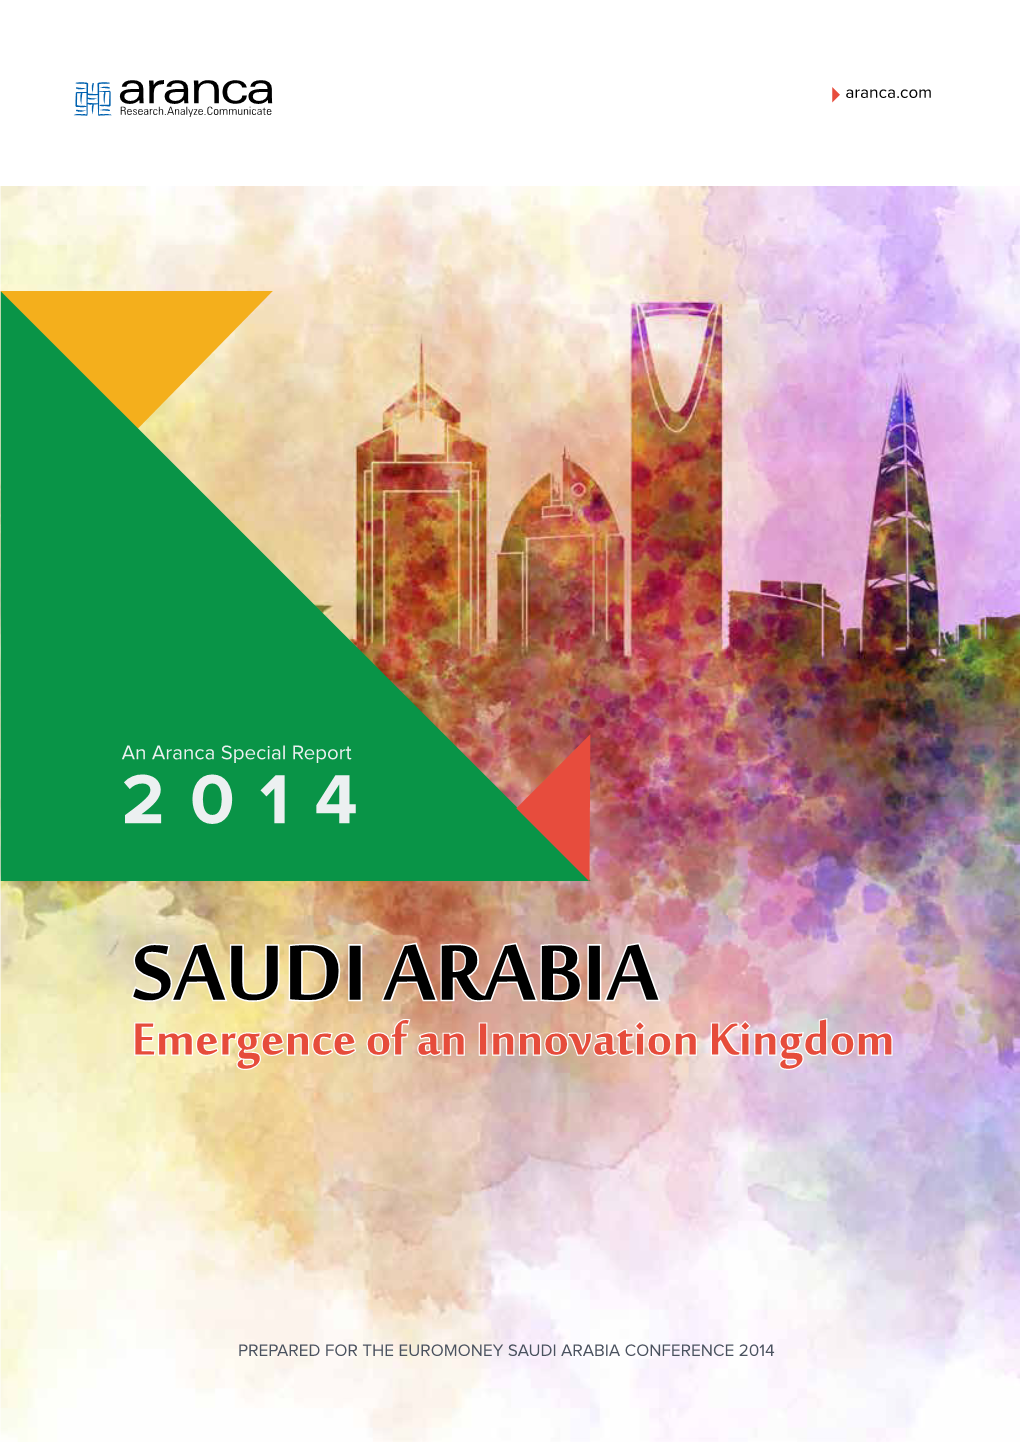 Saudi Arabia Emergence of an Innovation Kingdom